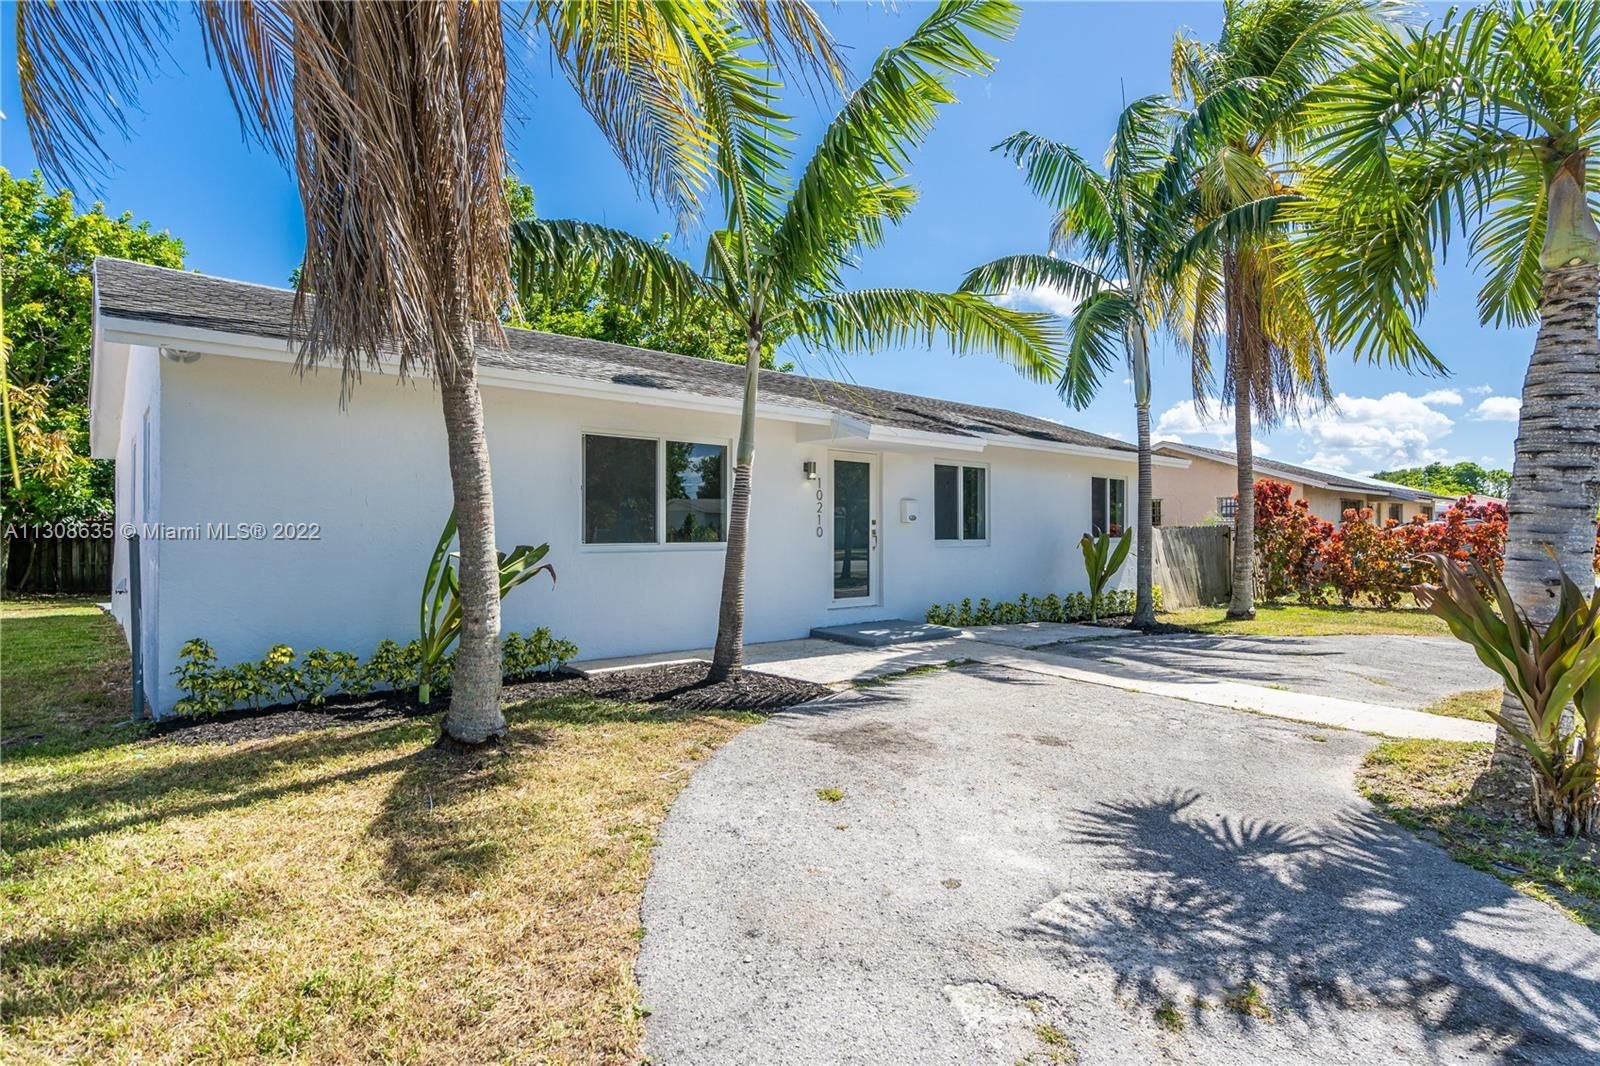 Real estate property located at 10210 168th St, Miami-Dade County, Miami, FL